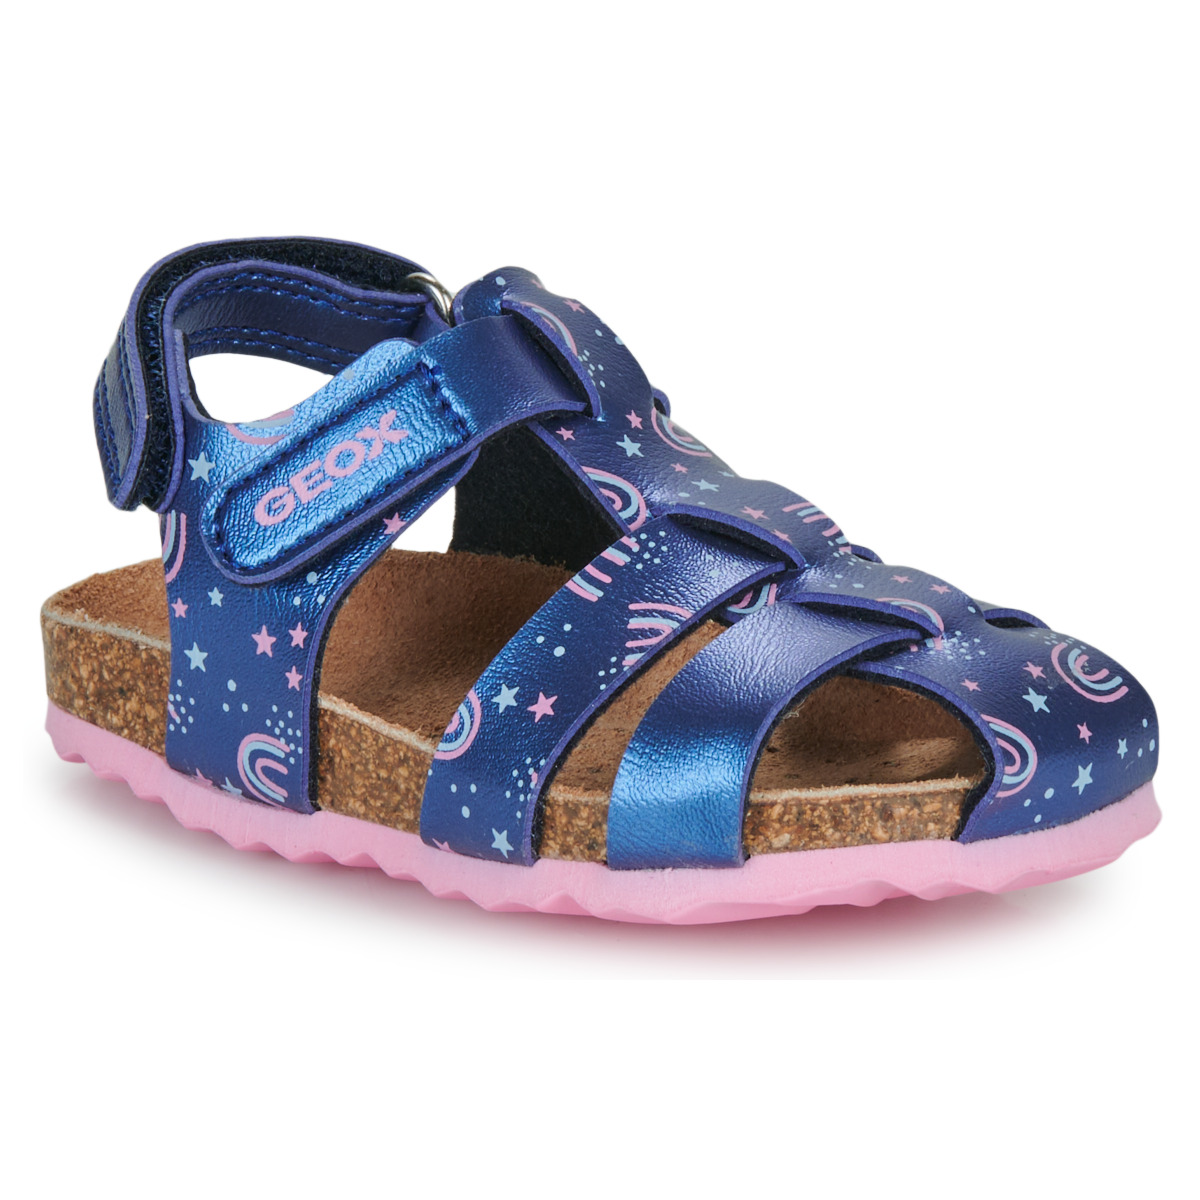 Chaussures Fille Sandales et Nu-pieds Geox B SANDAL CHALKI GIRL Bleu / Rose